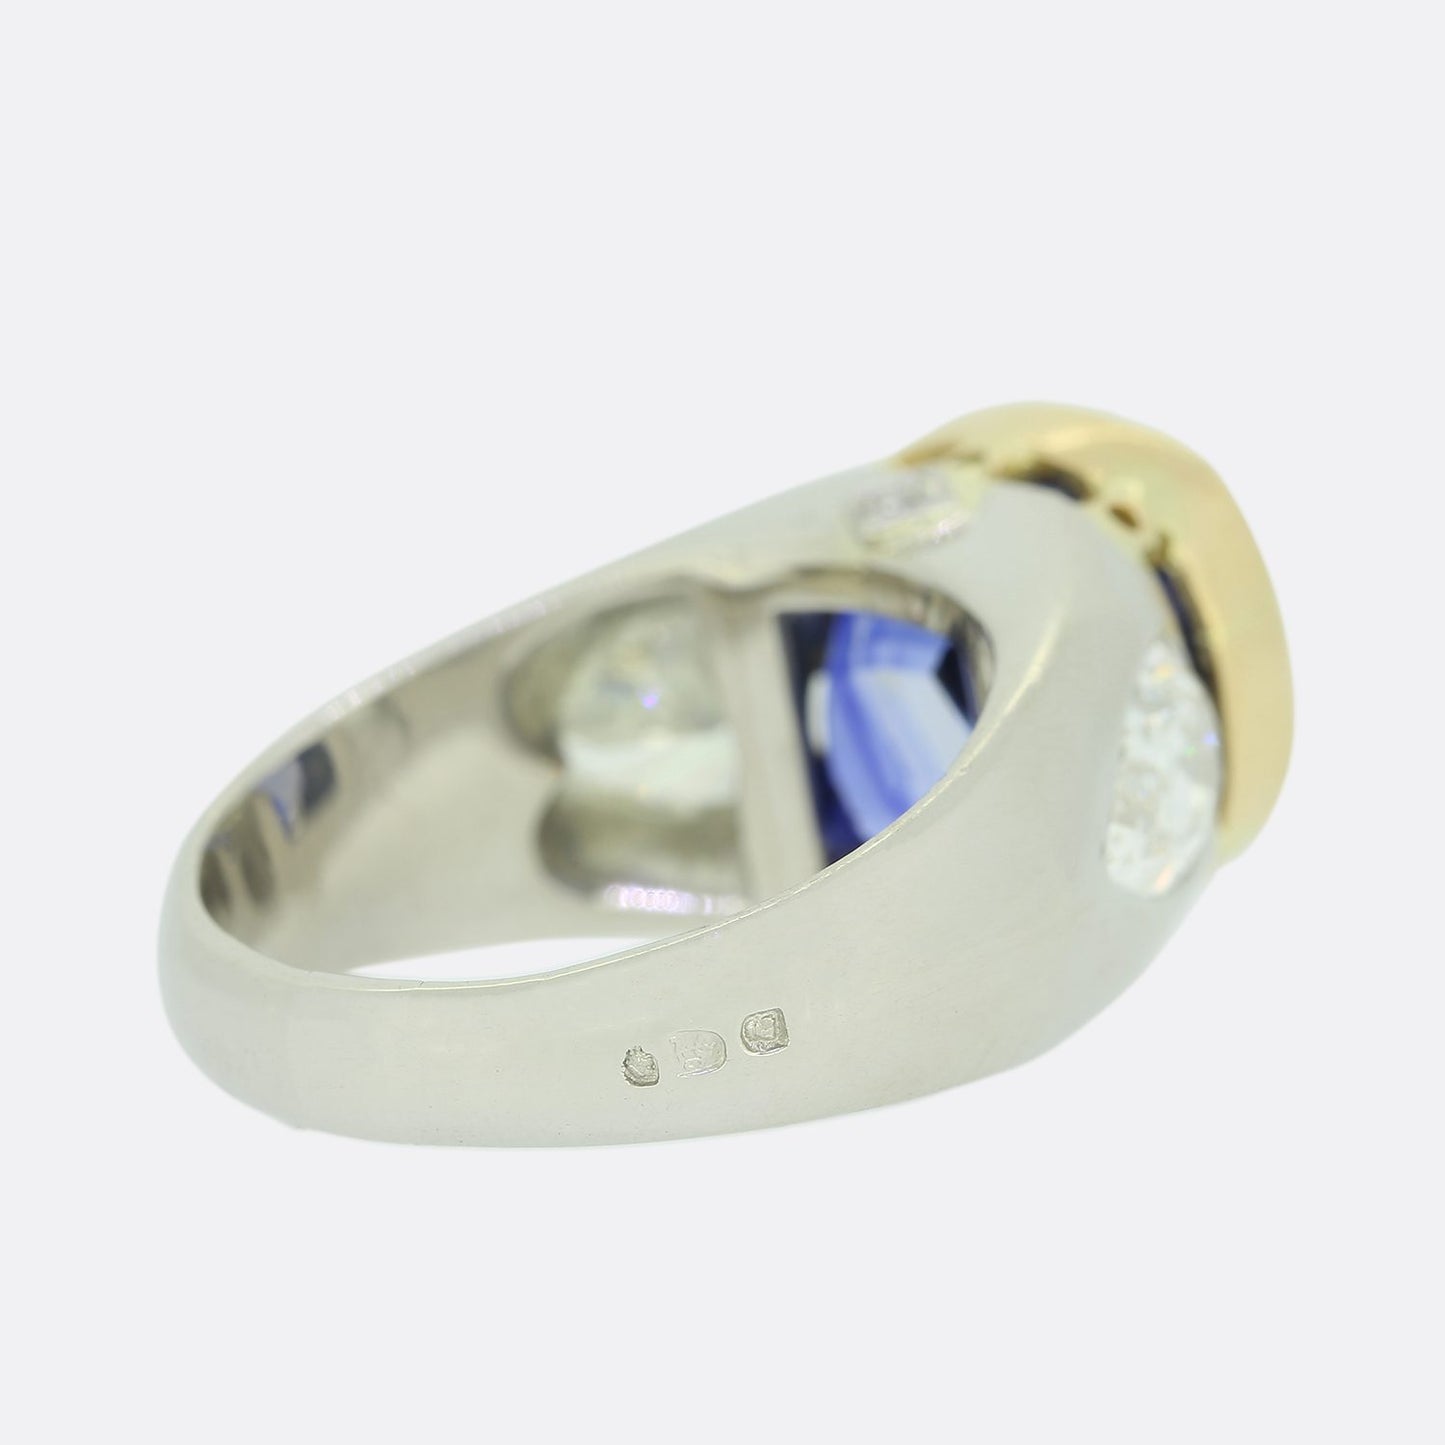 Vintage 8.46 Carat Unheated Ceylon Sapphire and Diamond Ring